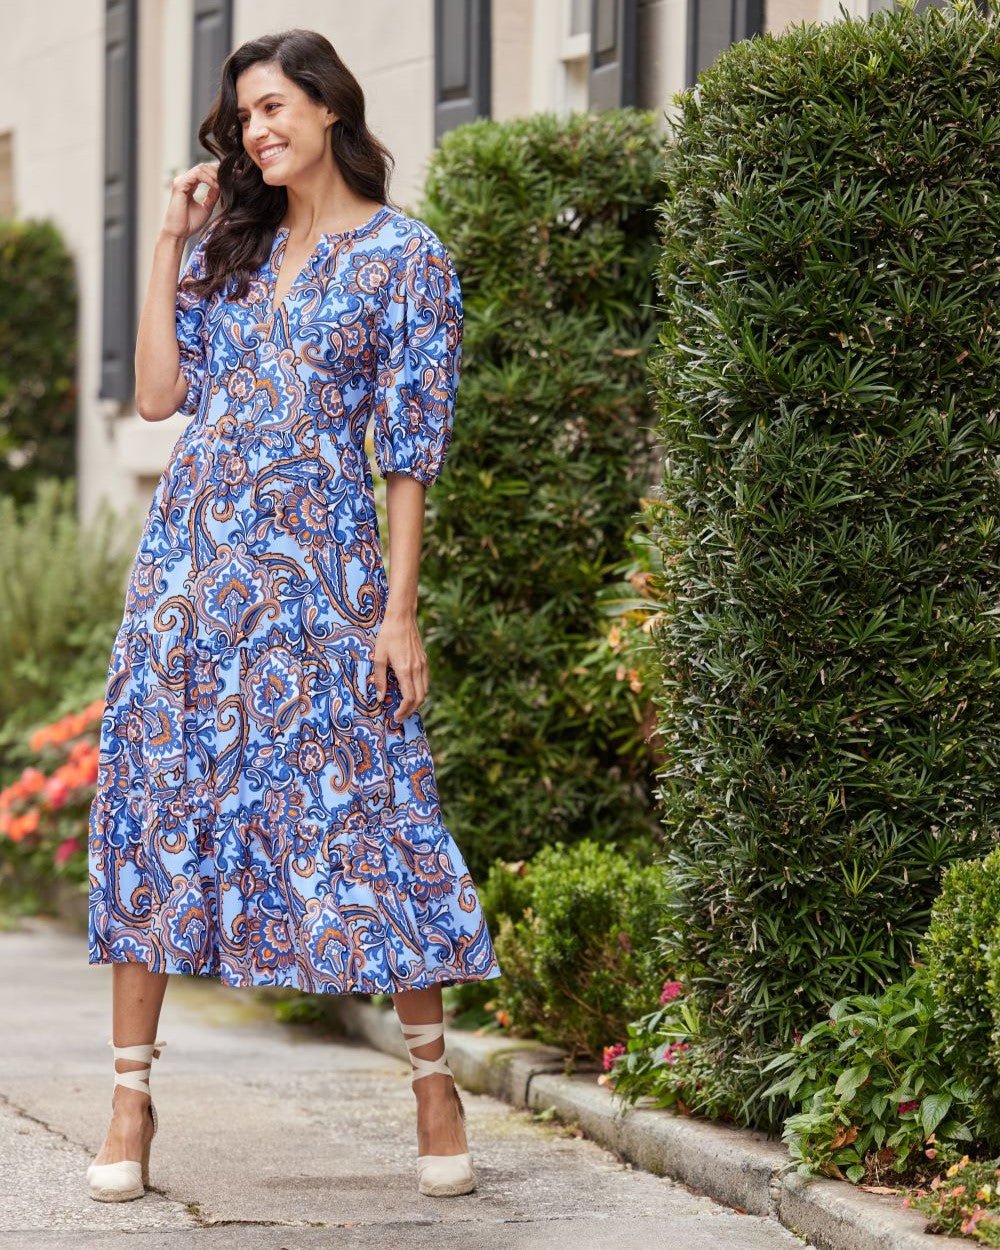 Jude Connally - Jordana Palm Beach Paisley Dress: Bluebell - Shorely Chic Boutique